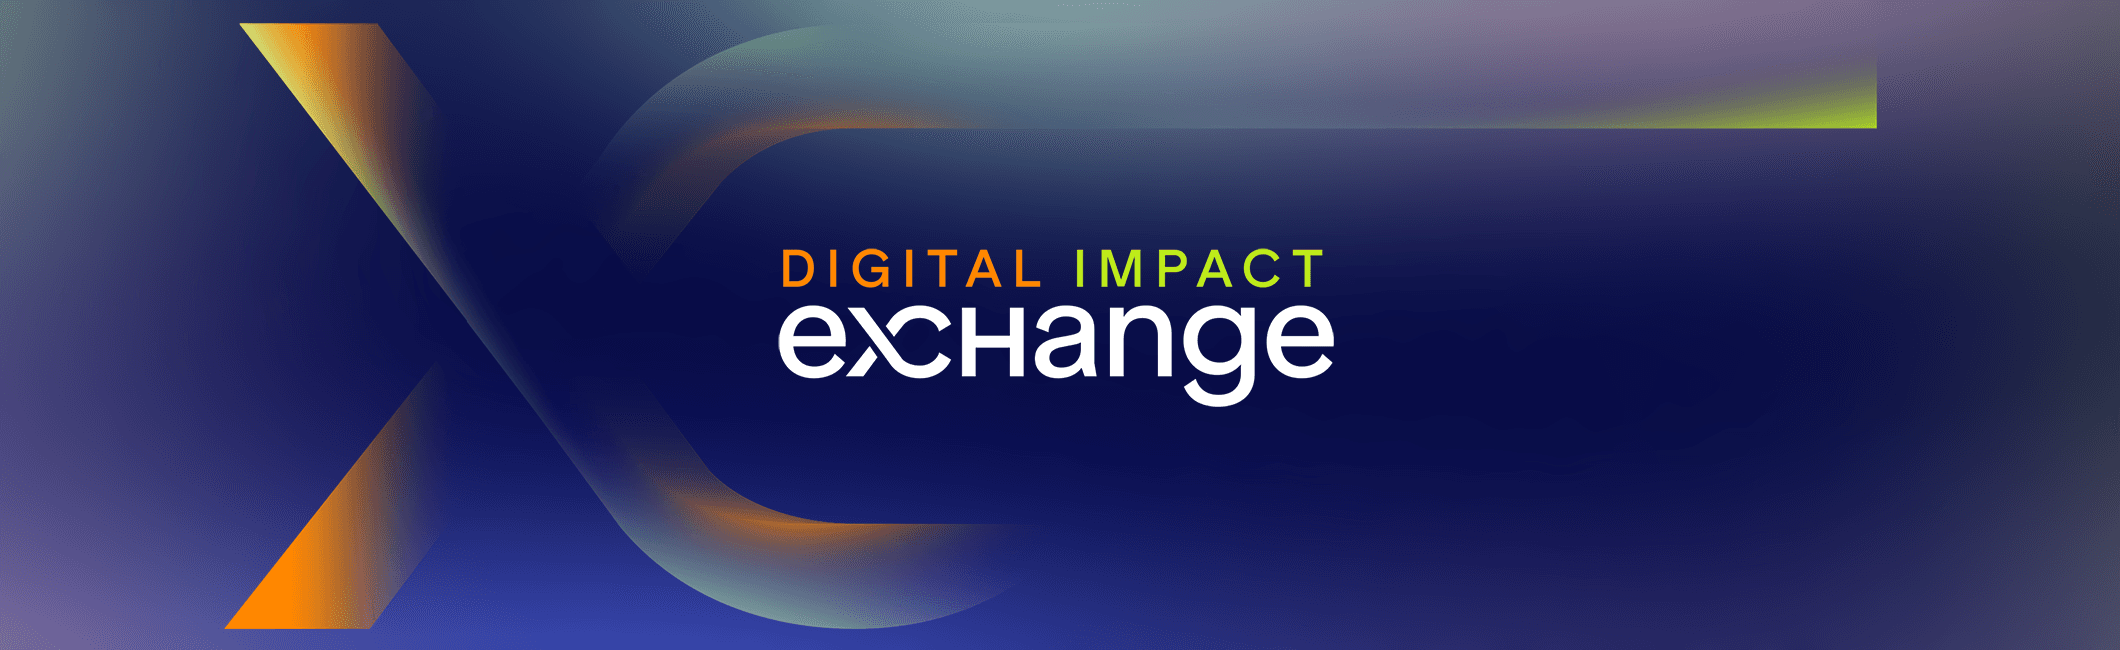 Digital Impact Exchage Hero Image.